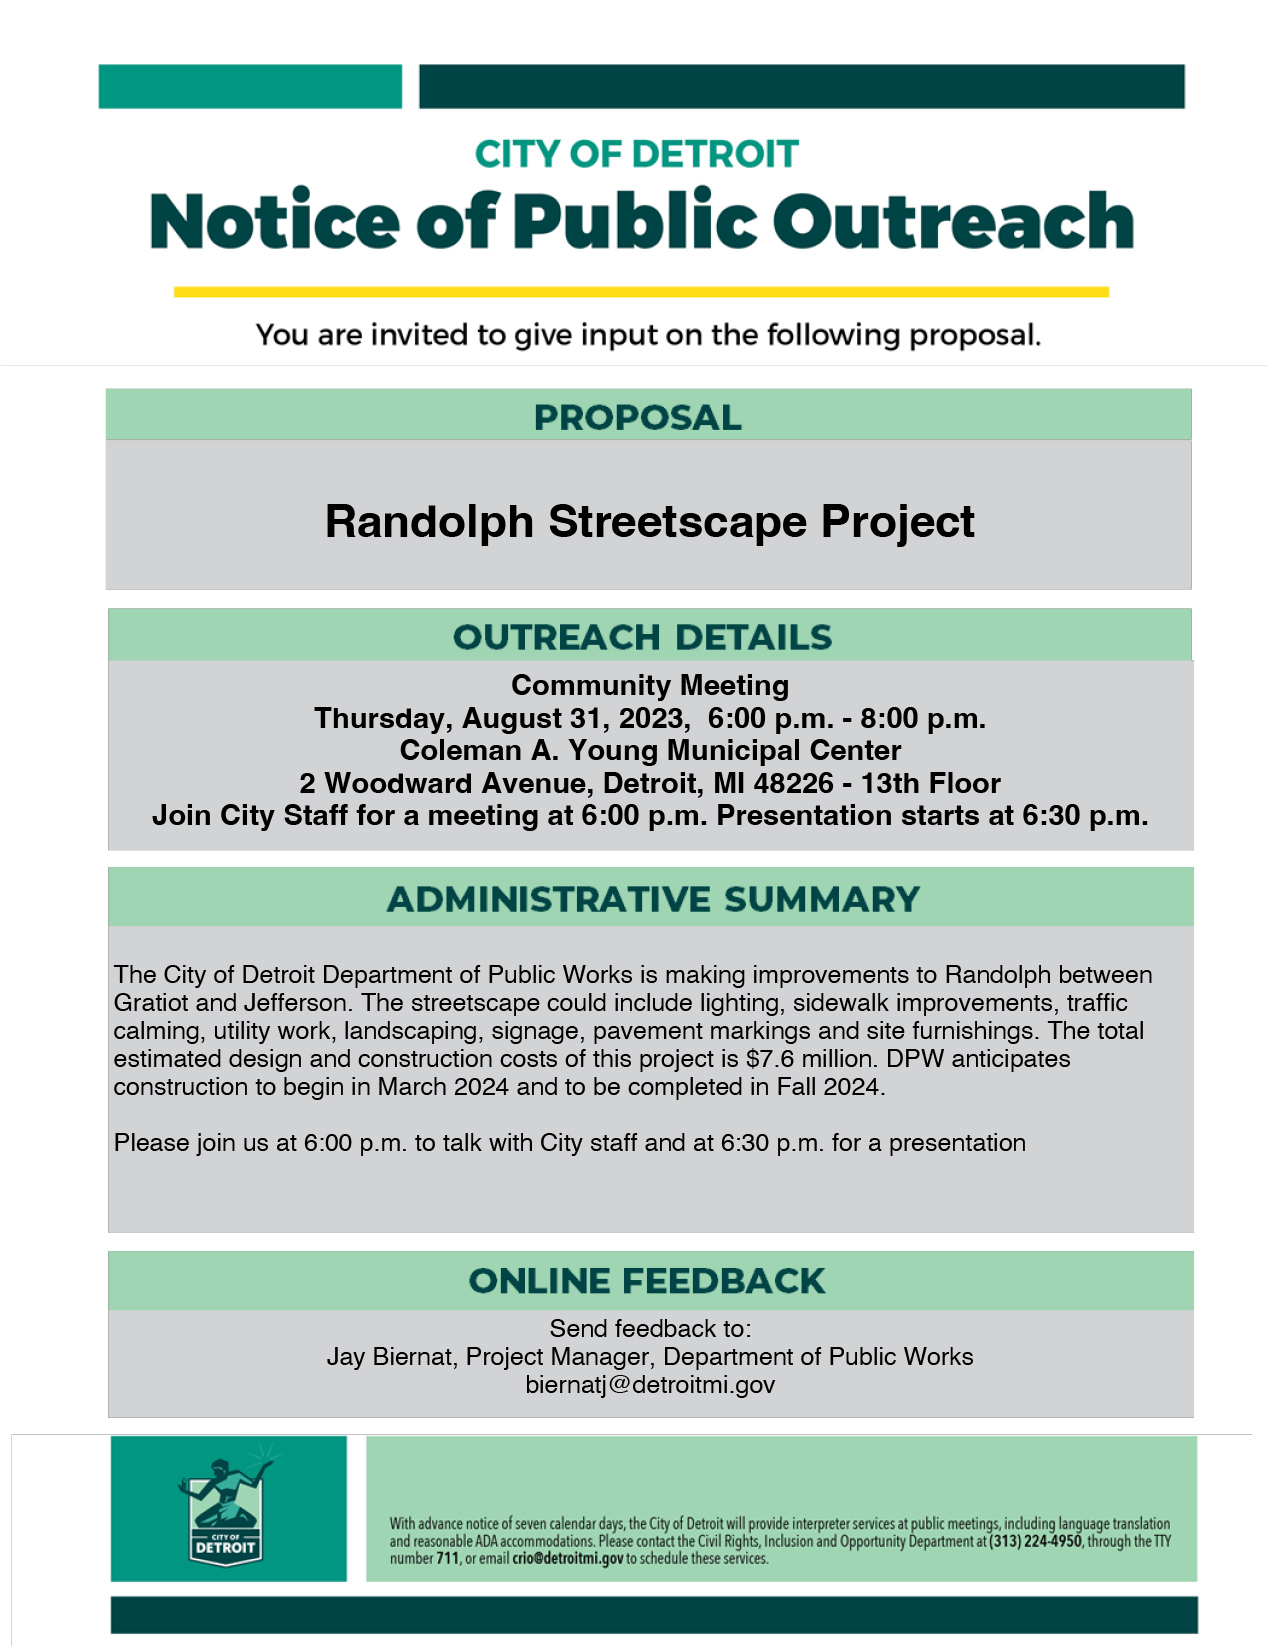 Randolph Streetscape Community Meet notice